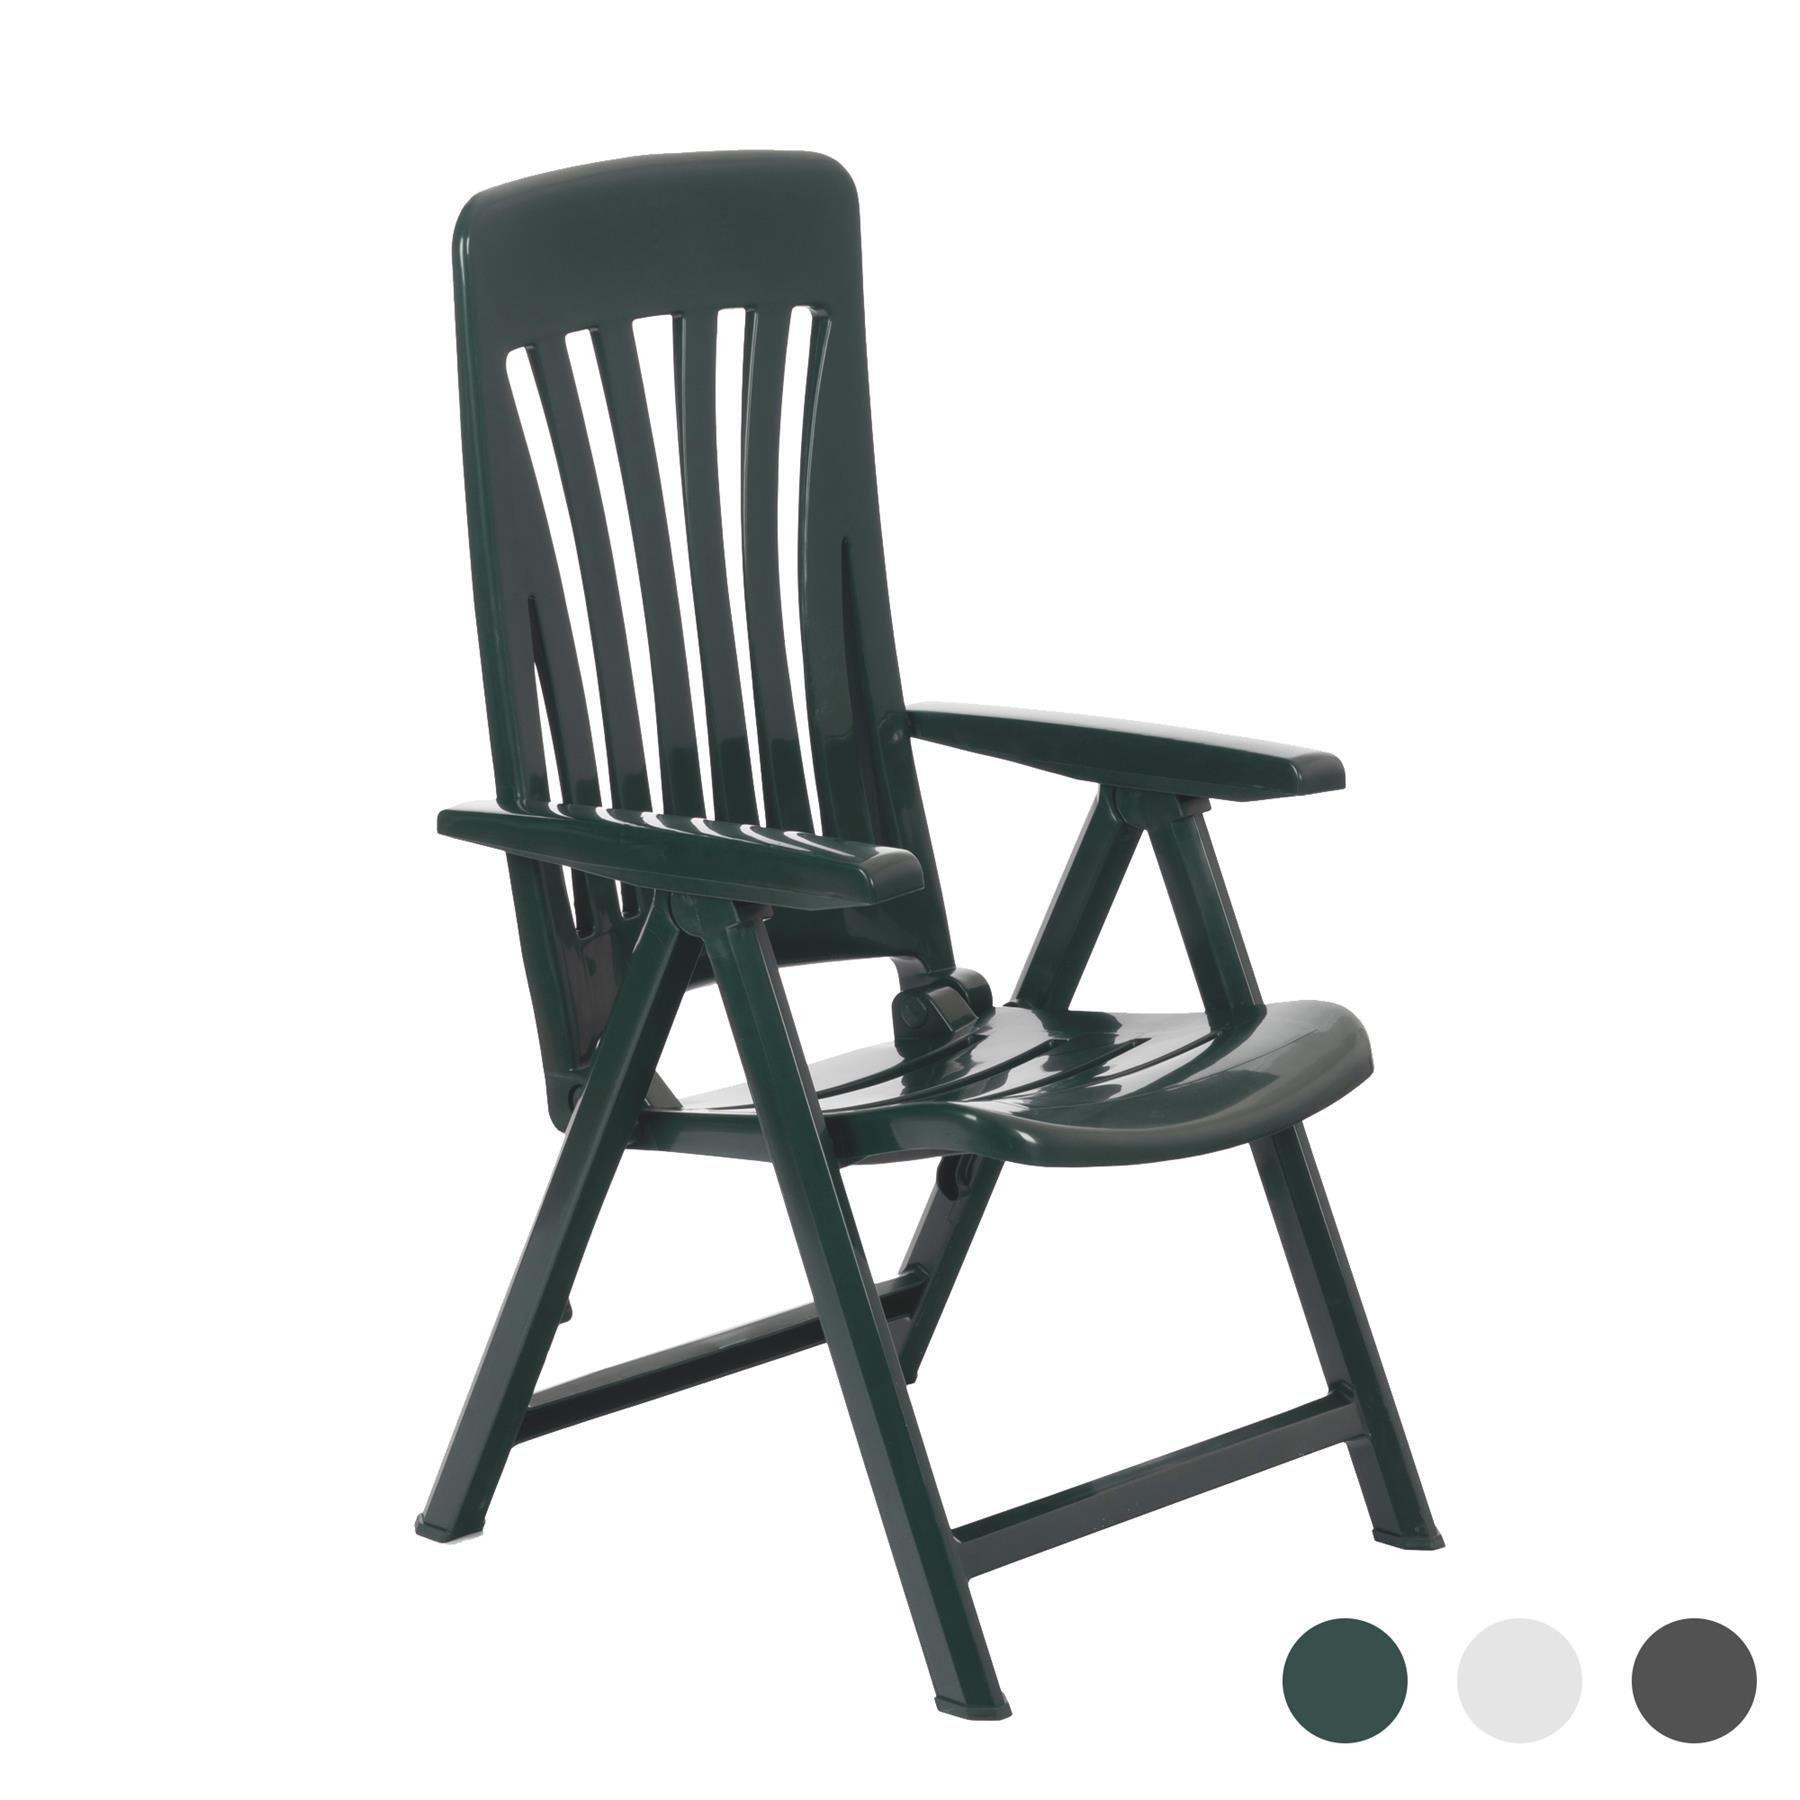 Blanes Reclining Garden Chair - image 1